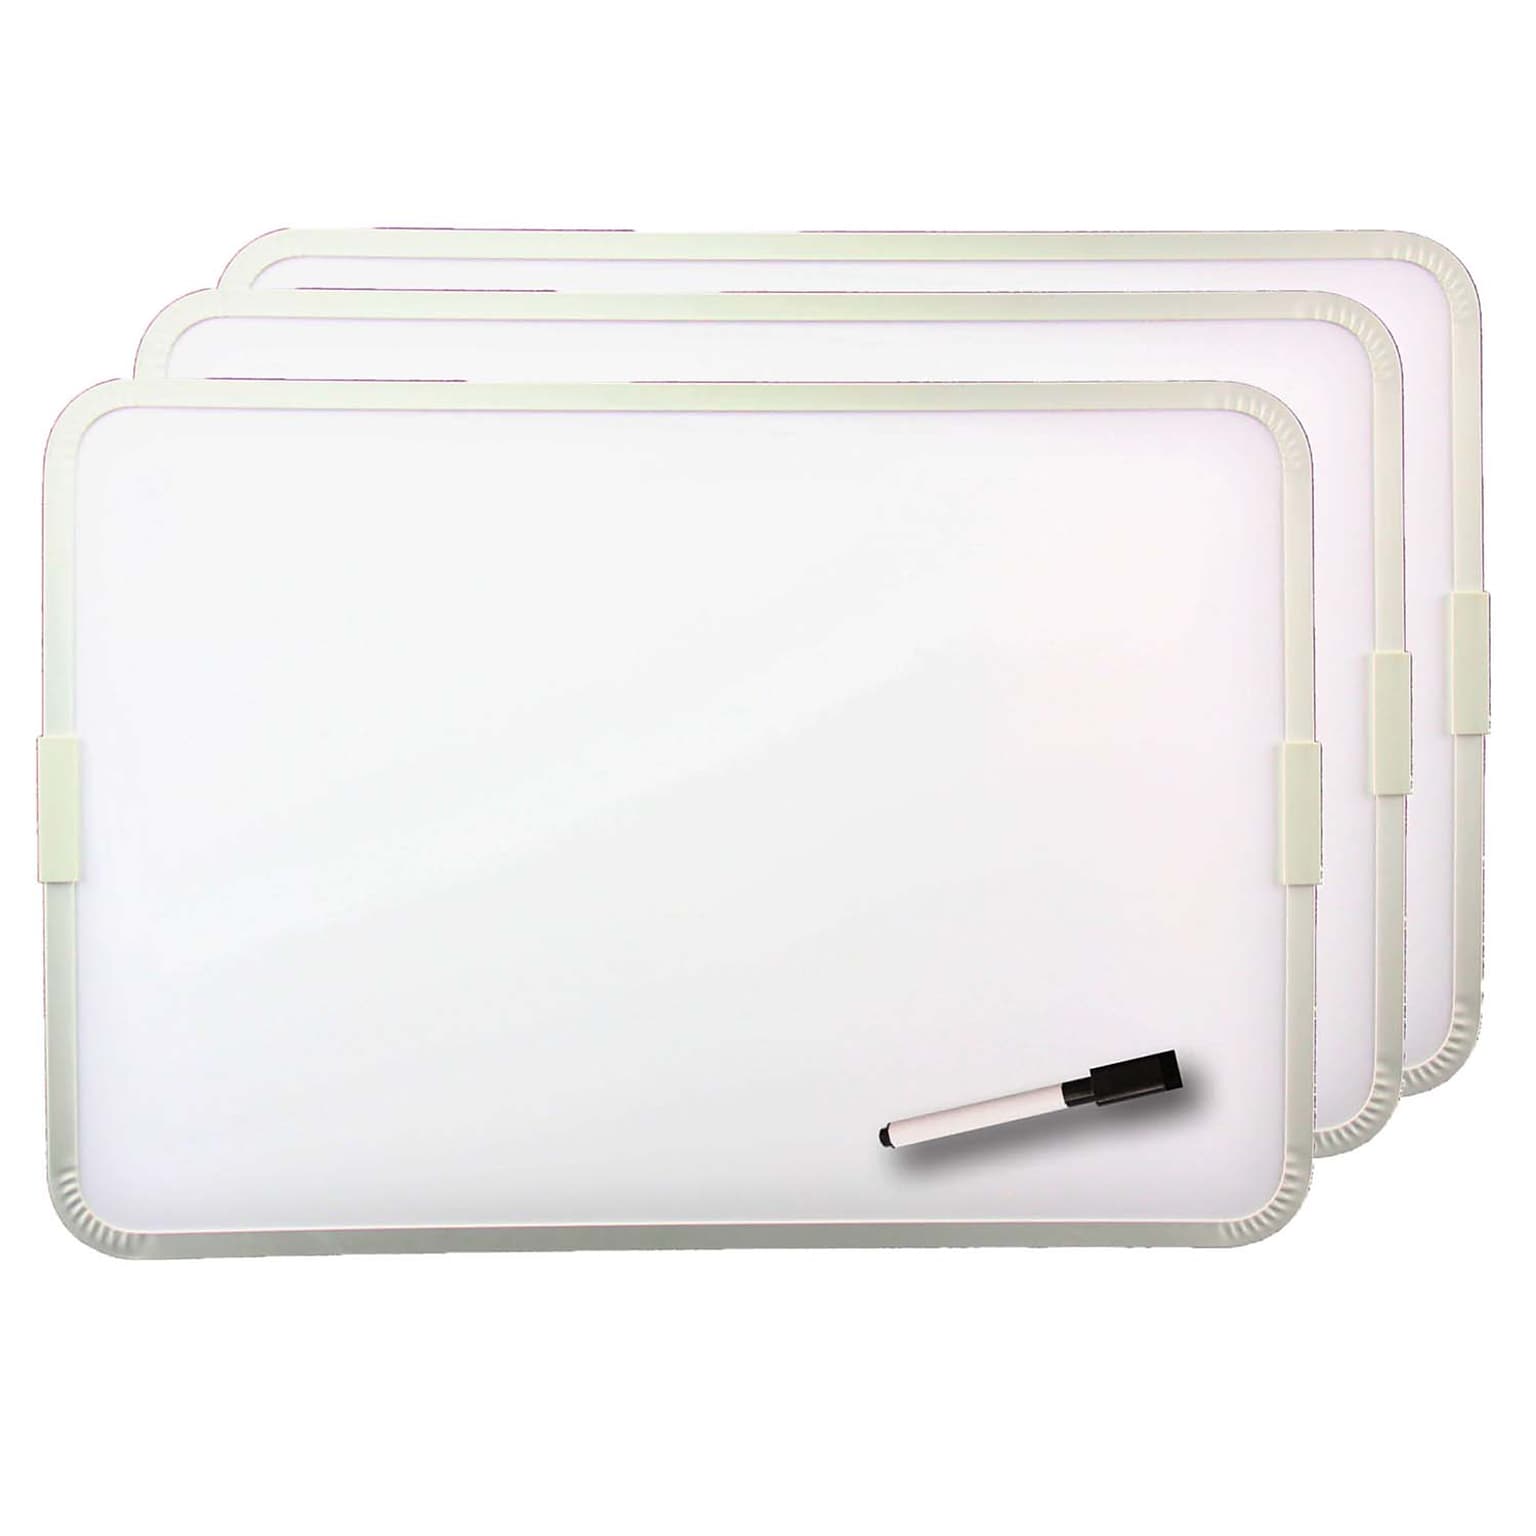 Flipside Products 2-Sided Magnetic Plastic Dry-Erase Whiteboard, Aluminum Framed, 12 x 17.5, Pack of 3 (FLP18232-3)